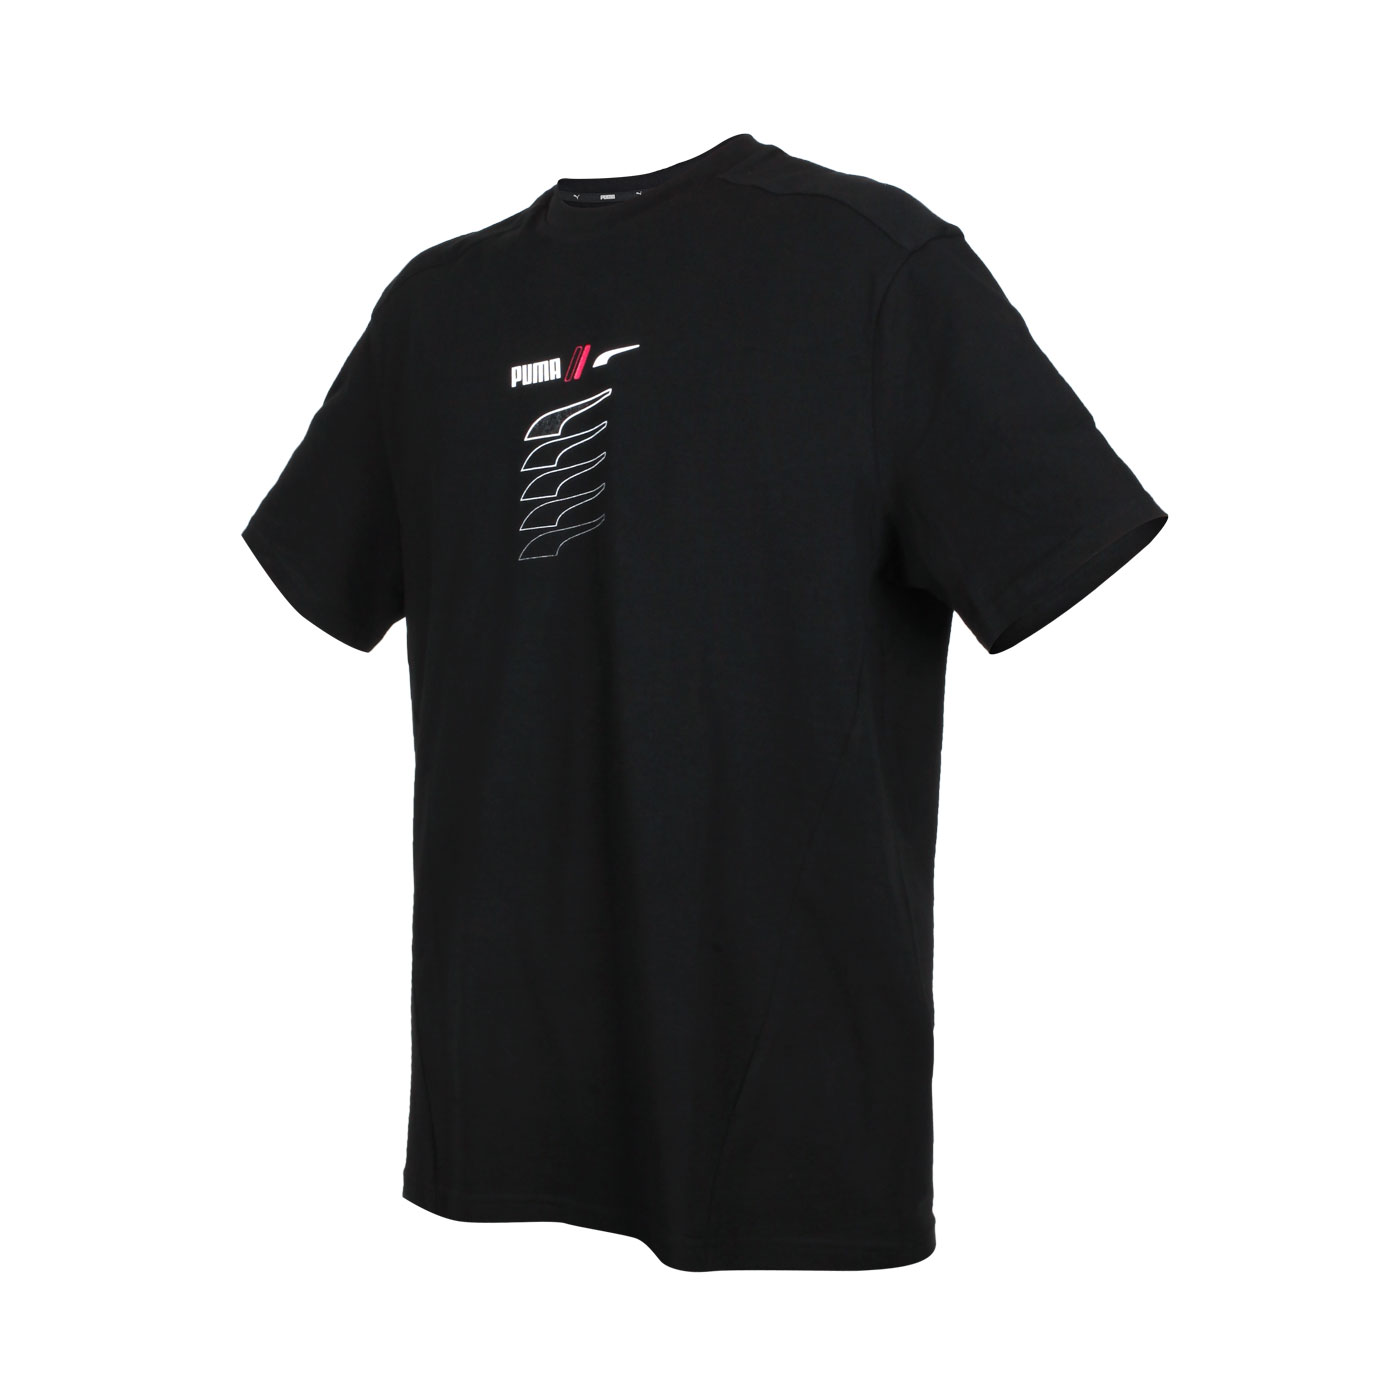 PUMA 男款基本系列RAD/CAL圖樣短袖T恤 67157501 - 黑白桃紅